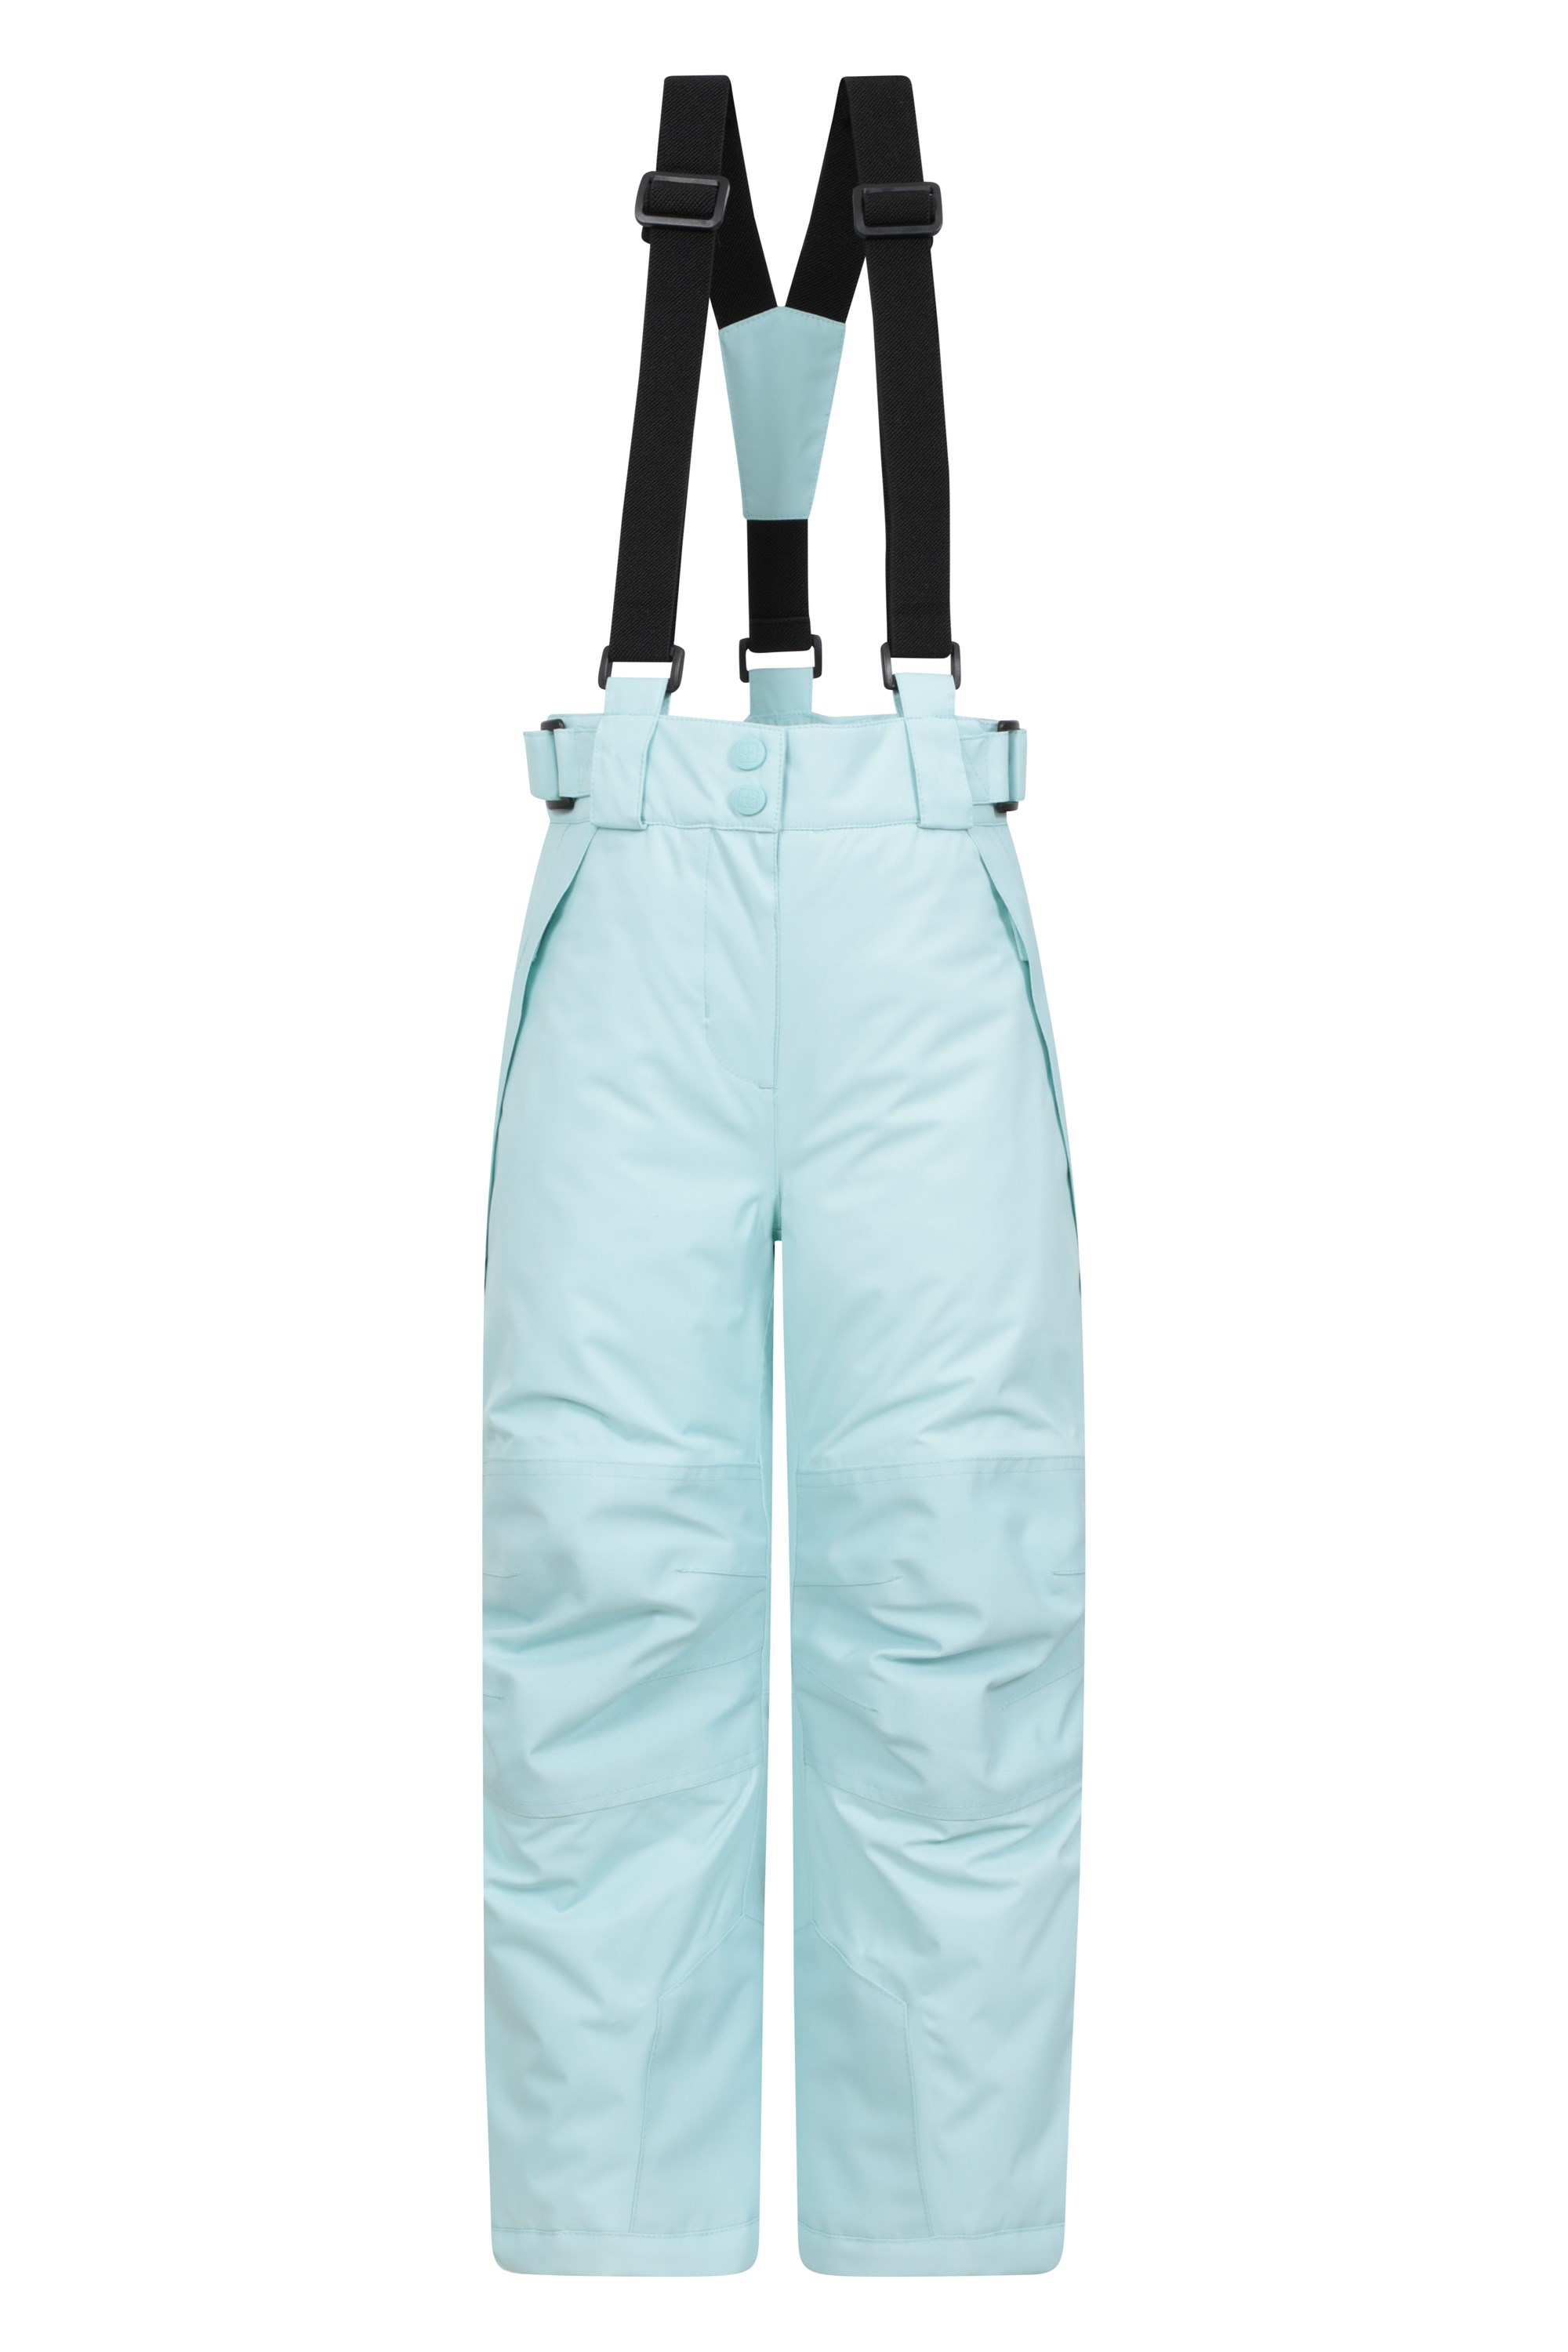 Falcon Extreme Kids Ski Pants - Turquoise